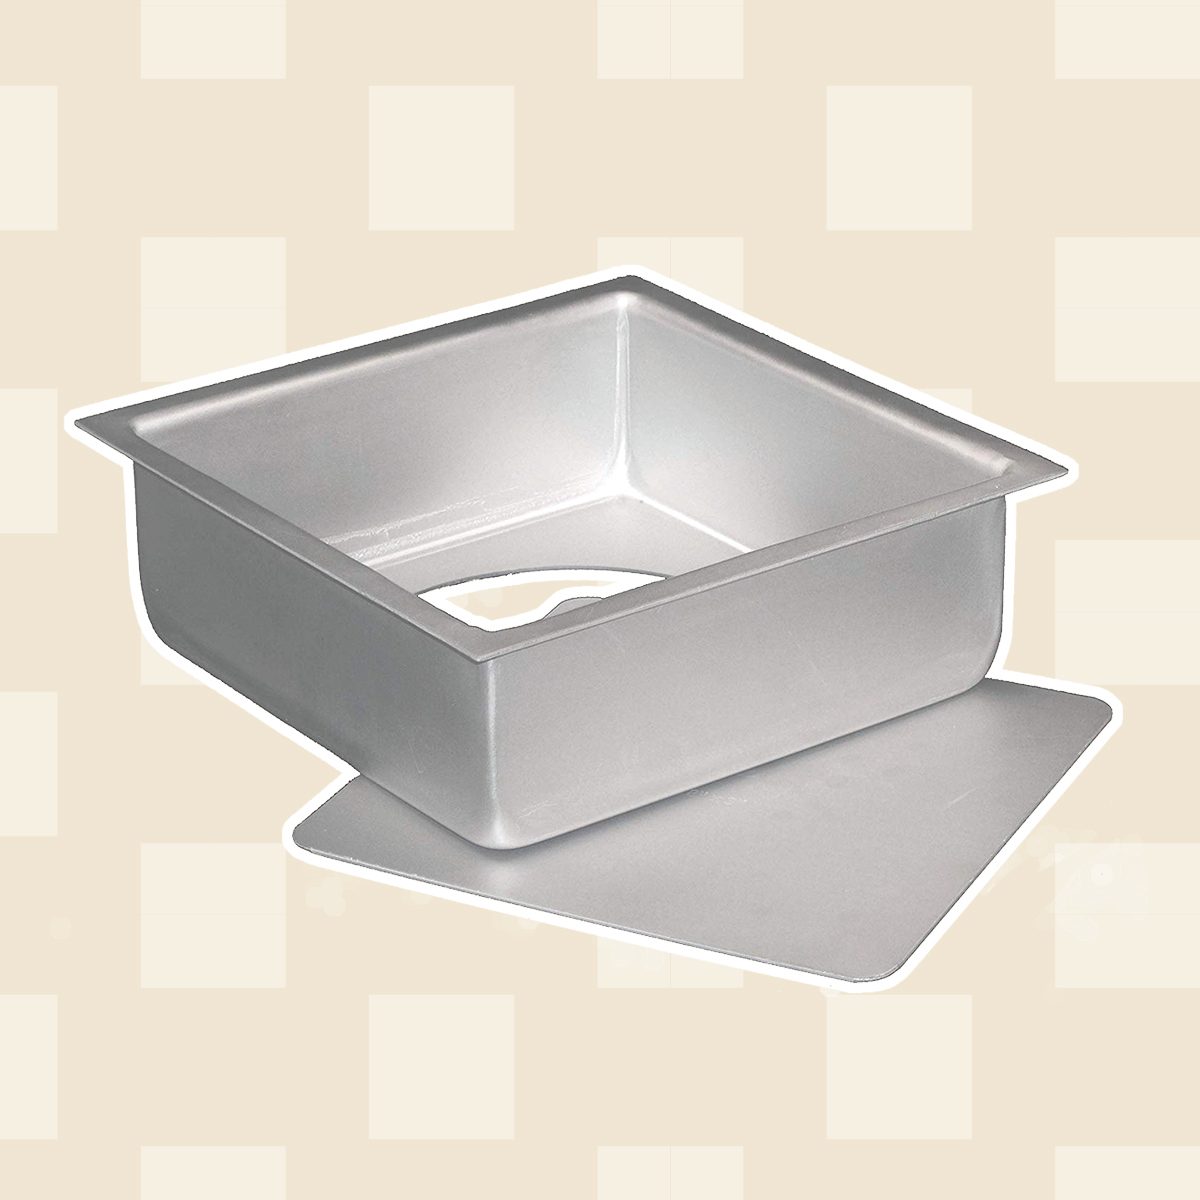 https://www.tasteofhome.com/wp-content/uploads/2018/11/Aluminum-Square-Cheesecake-Pan.jpg?fit=700%2C700